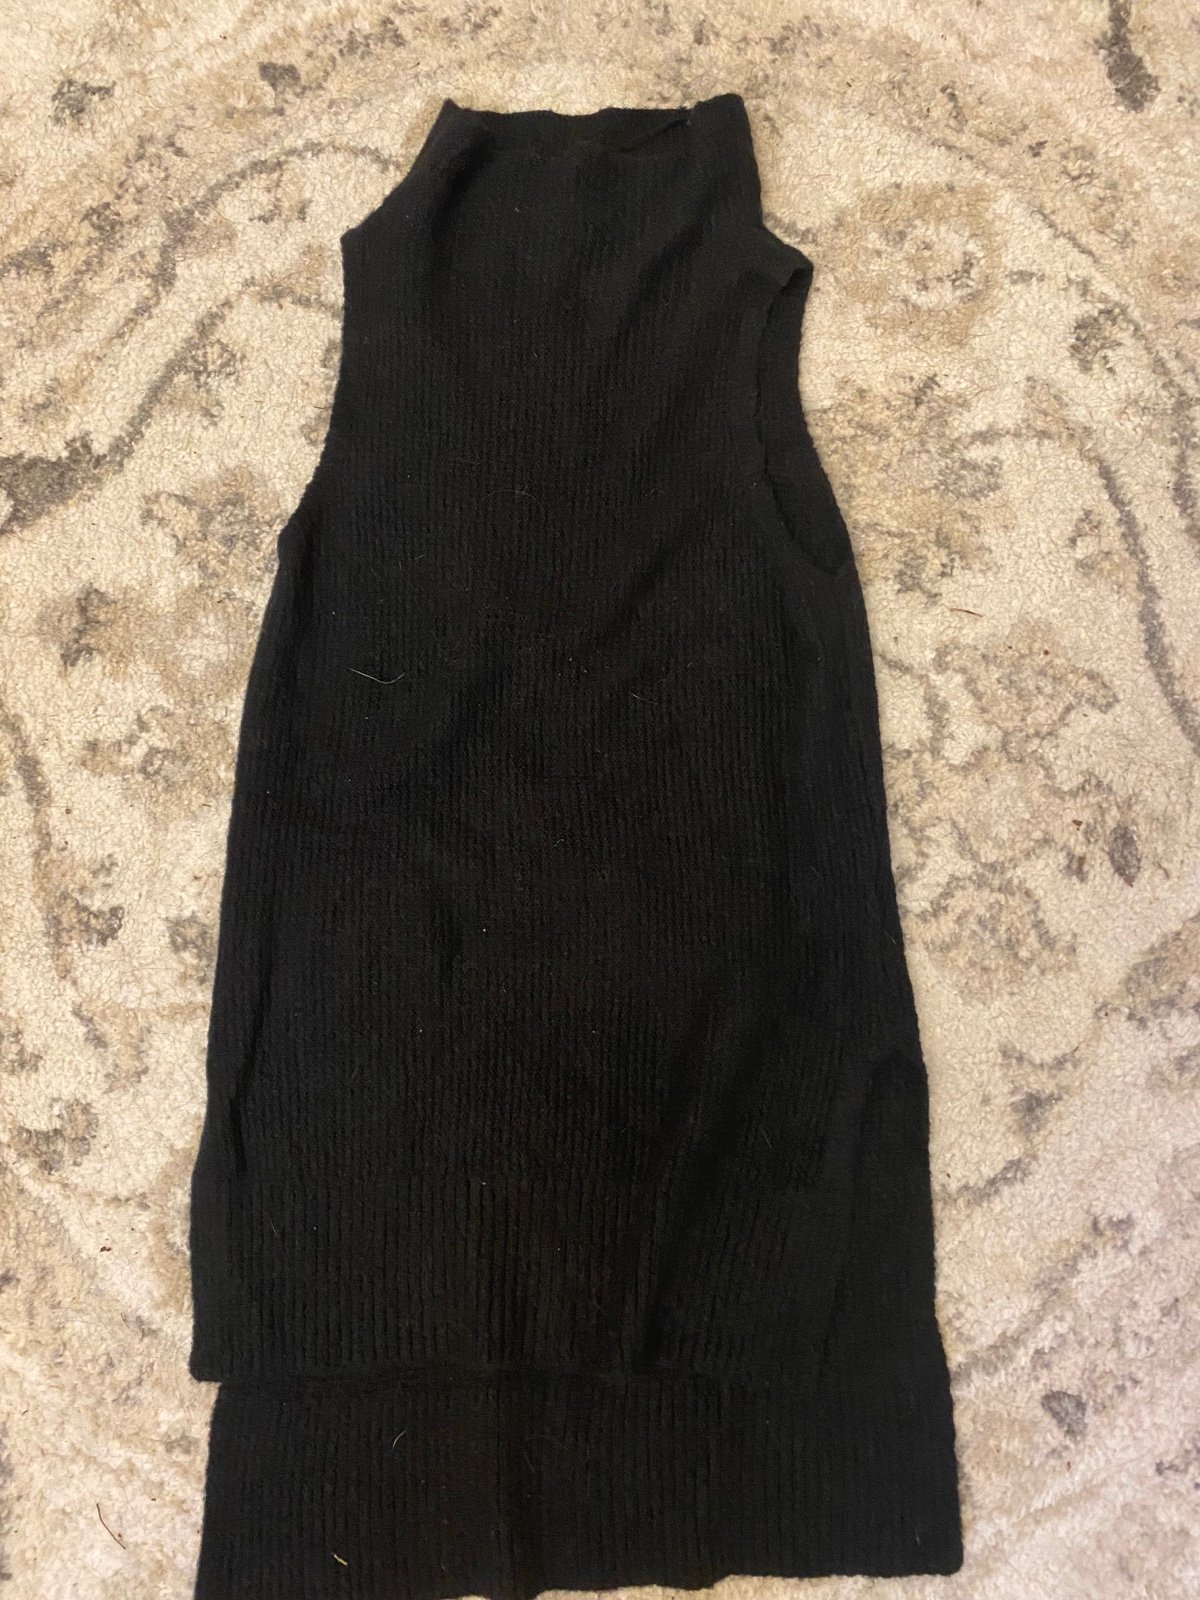 Classic Black Size Small Sweater Vest Sleeveless KO3S4j